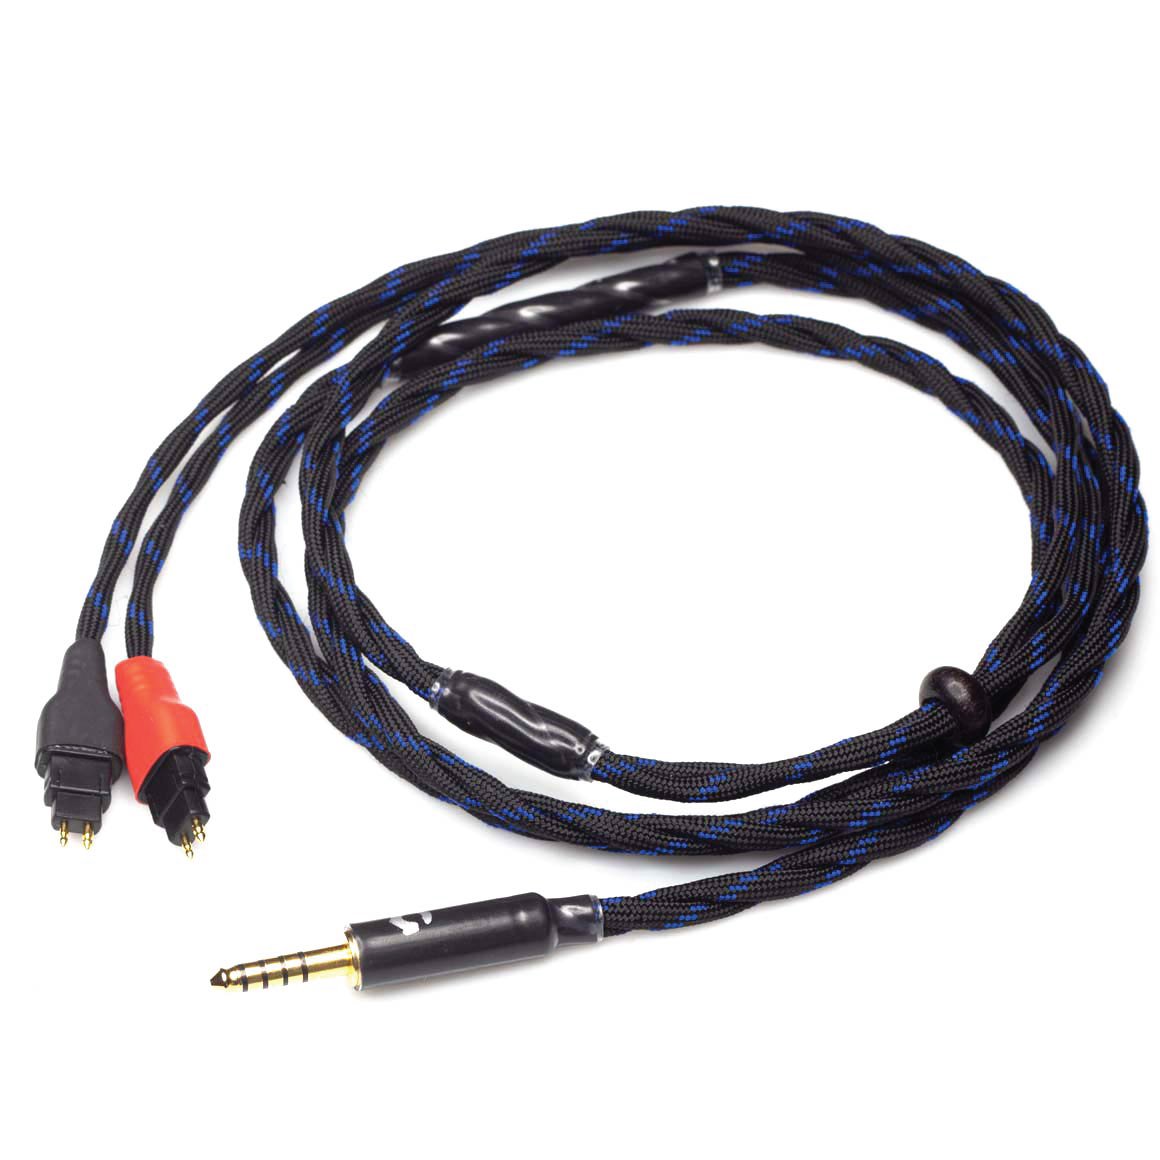 Headphone Zone - Balanced Cable for Sennheiser HD600/ HD650/ HD660/ HD6XX/ HD660 S